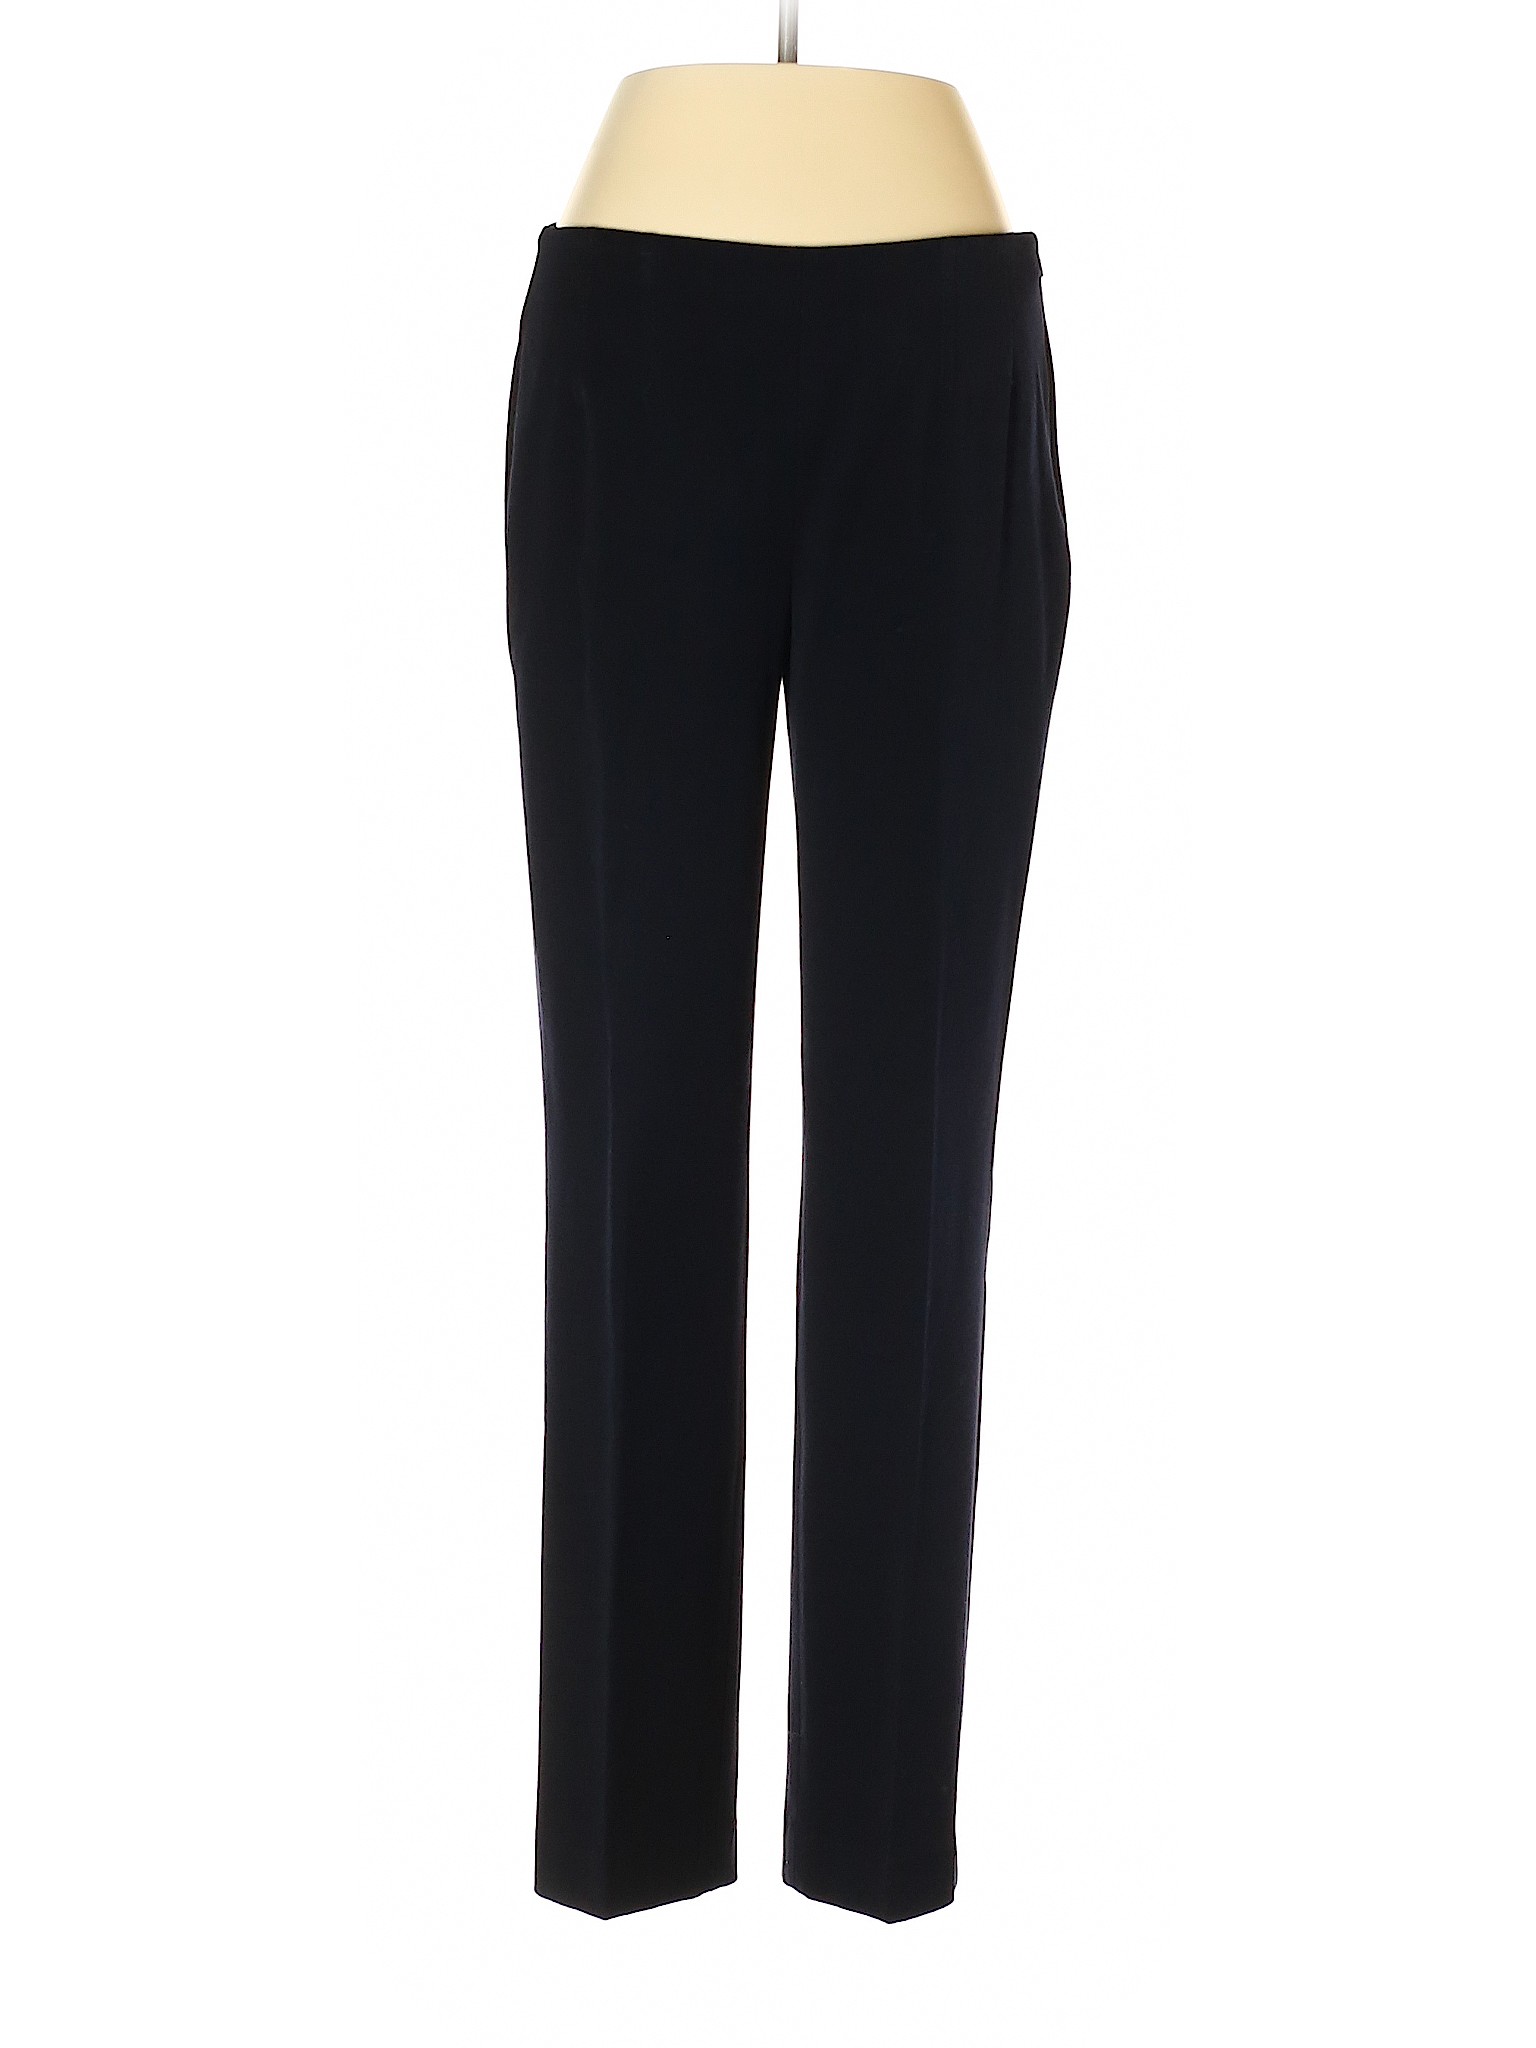 Talbots Women Black Dress Pants 4 | eBay